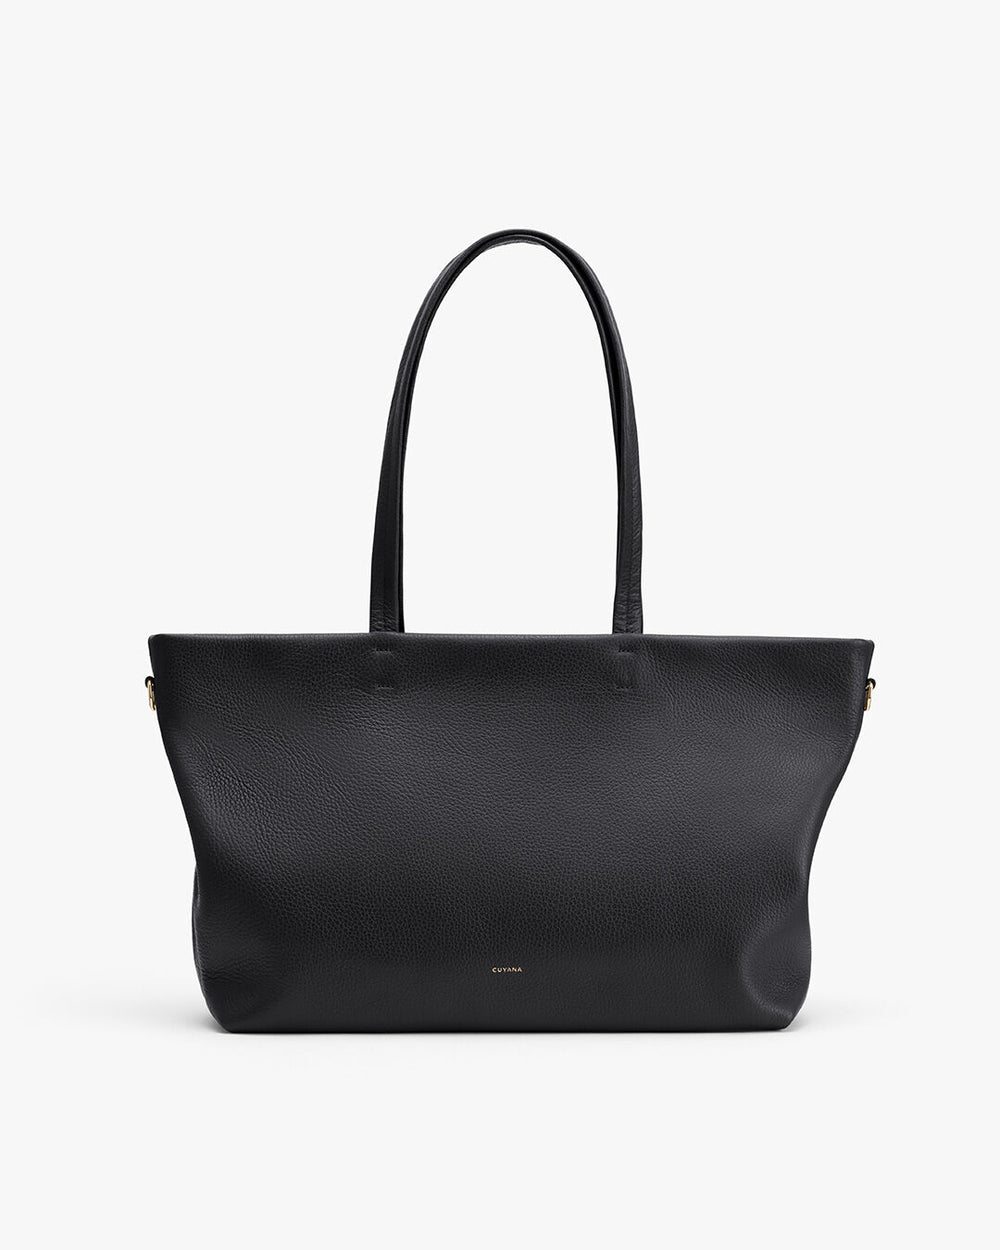 Help me choose a small black bag? Looking for something elegant